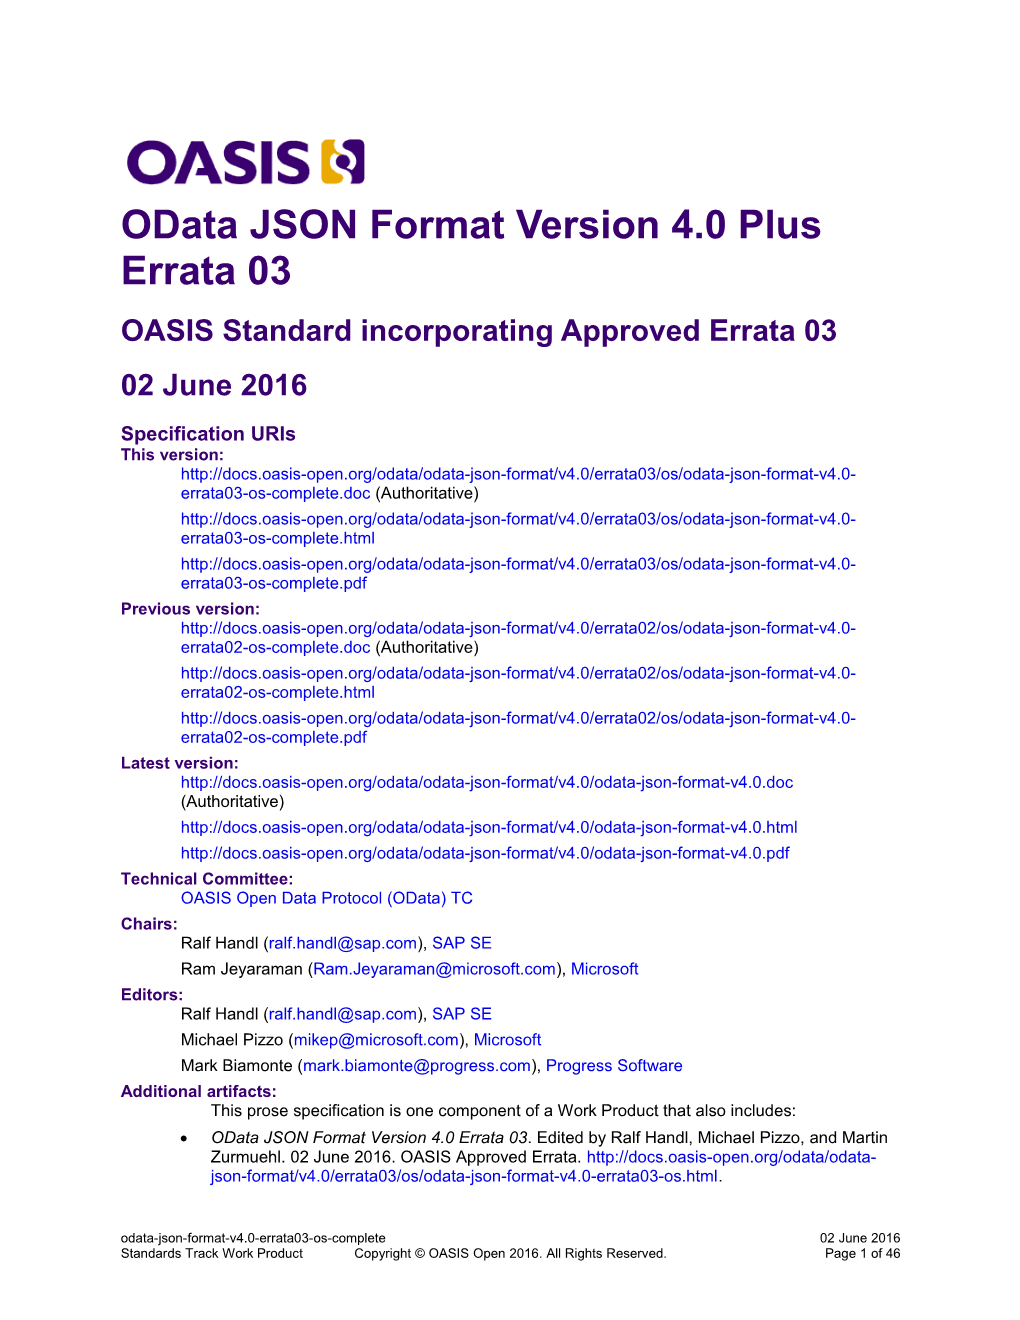 Odata JSON Format Version 4.0 Plus Errata 03